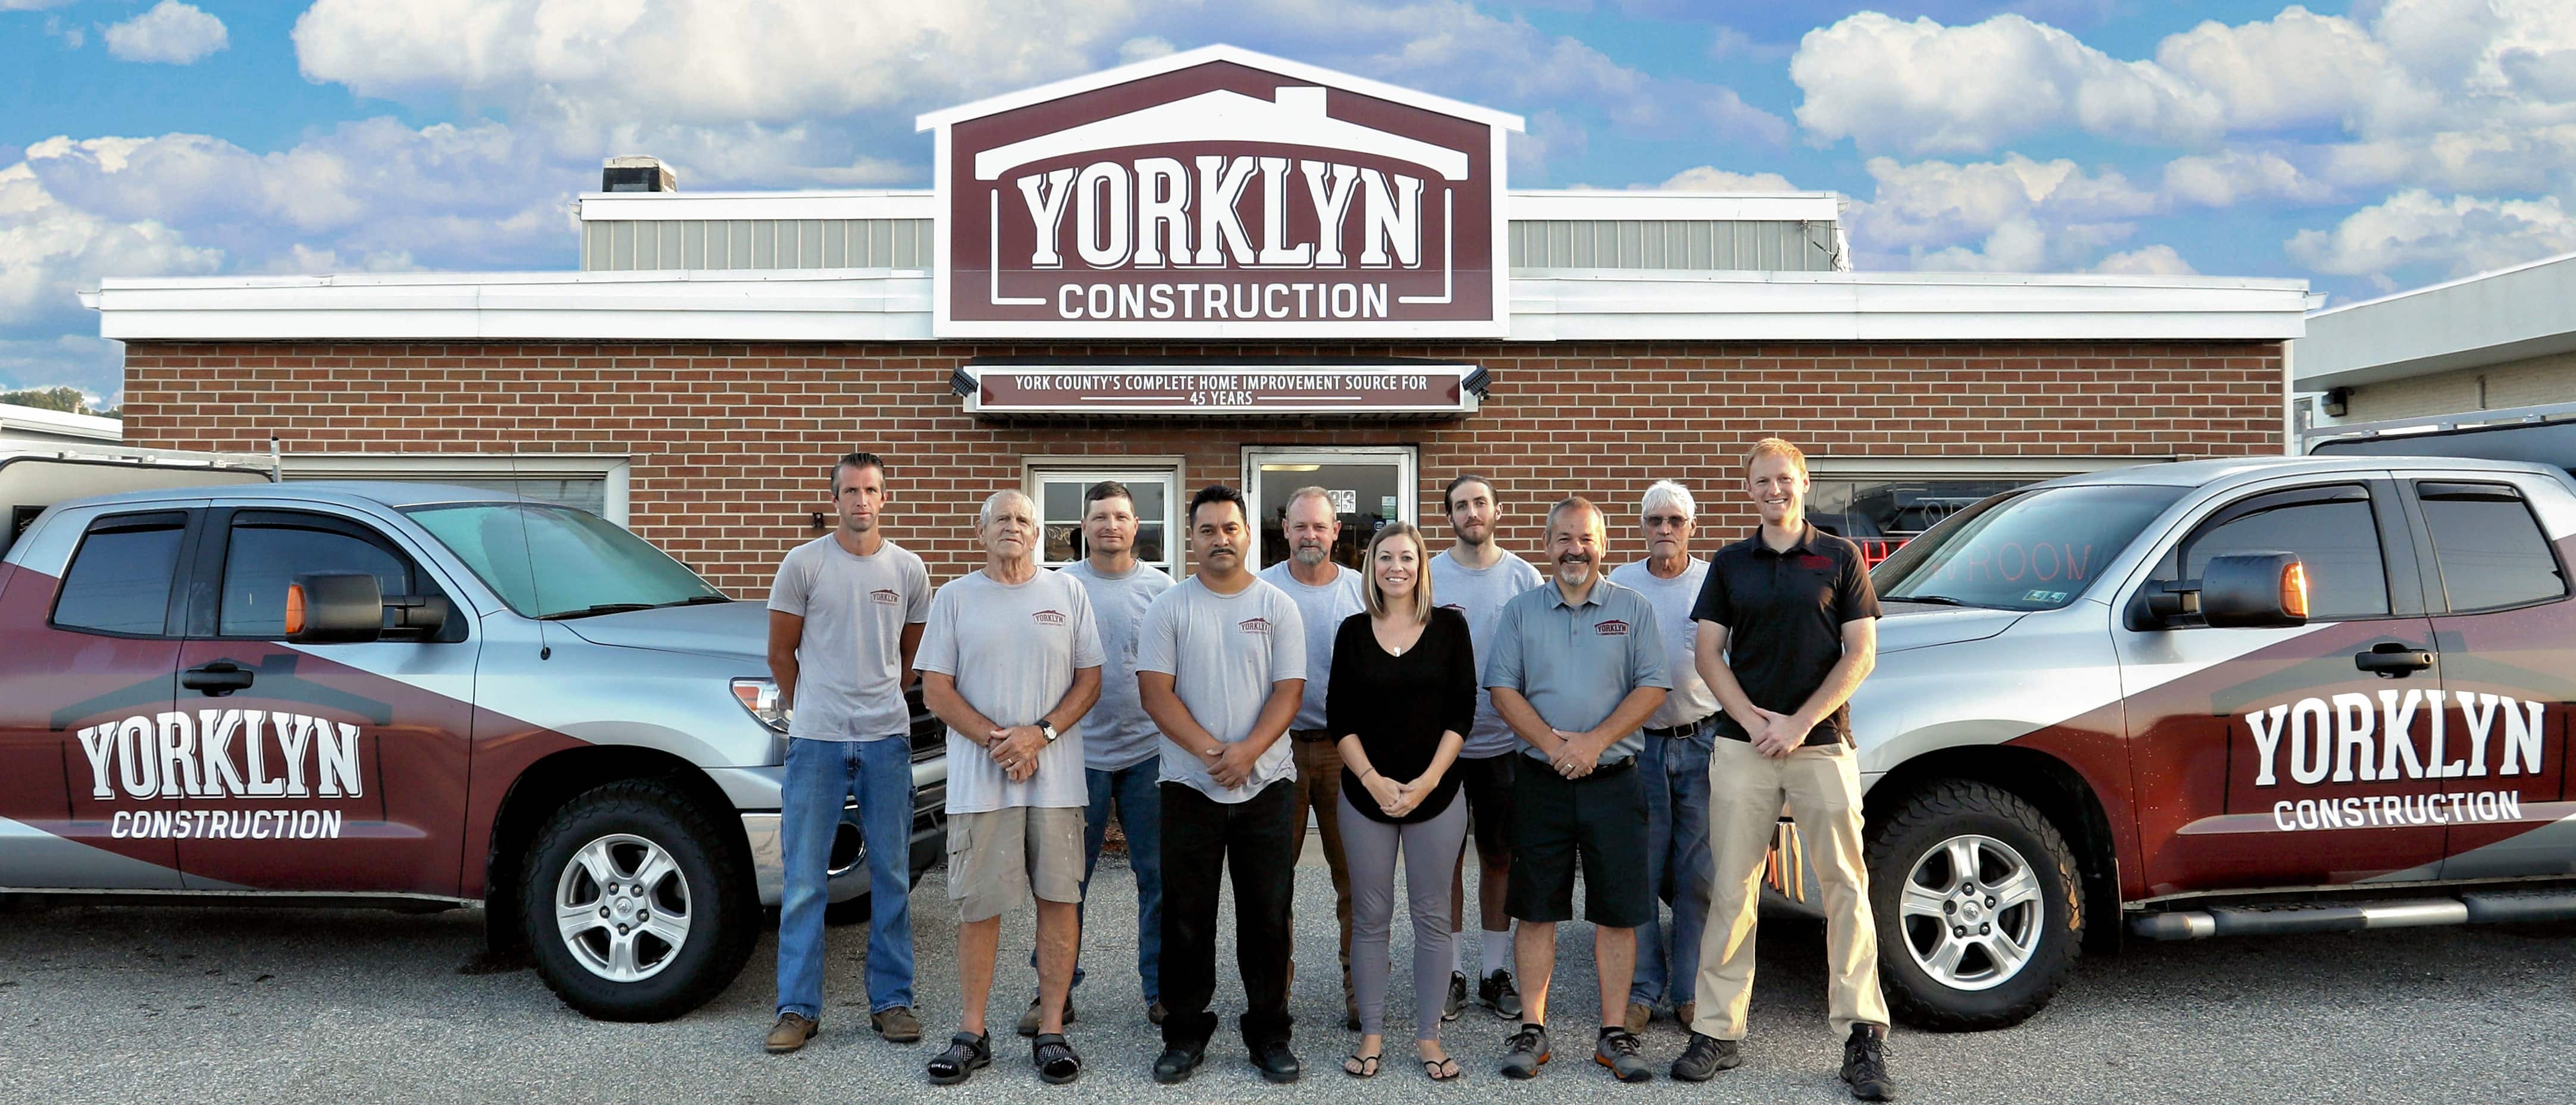 Yorklyn Construction York PA, Professionals